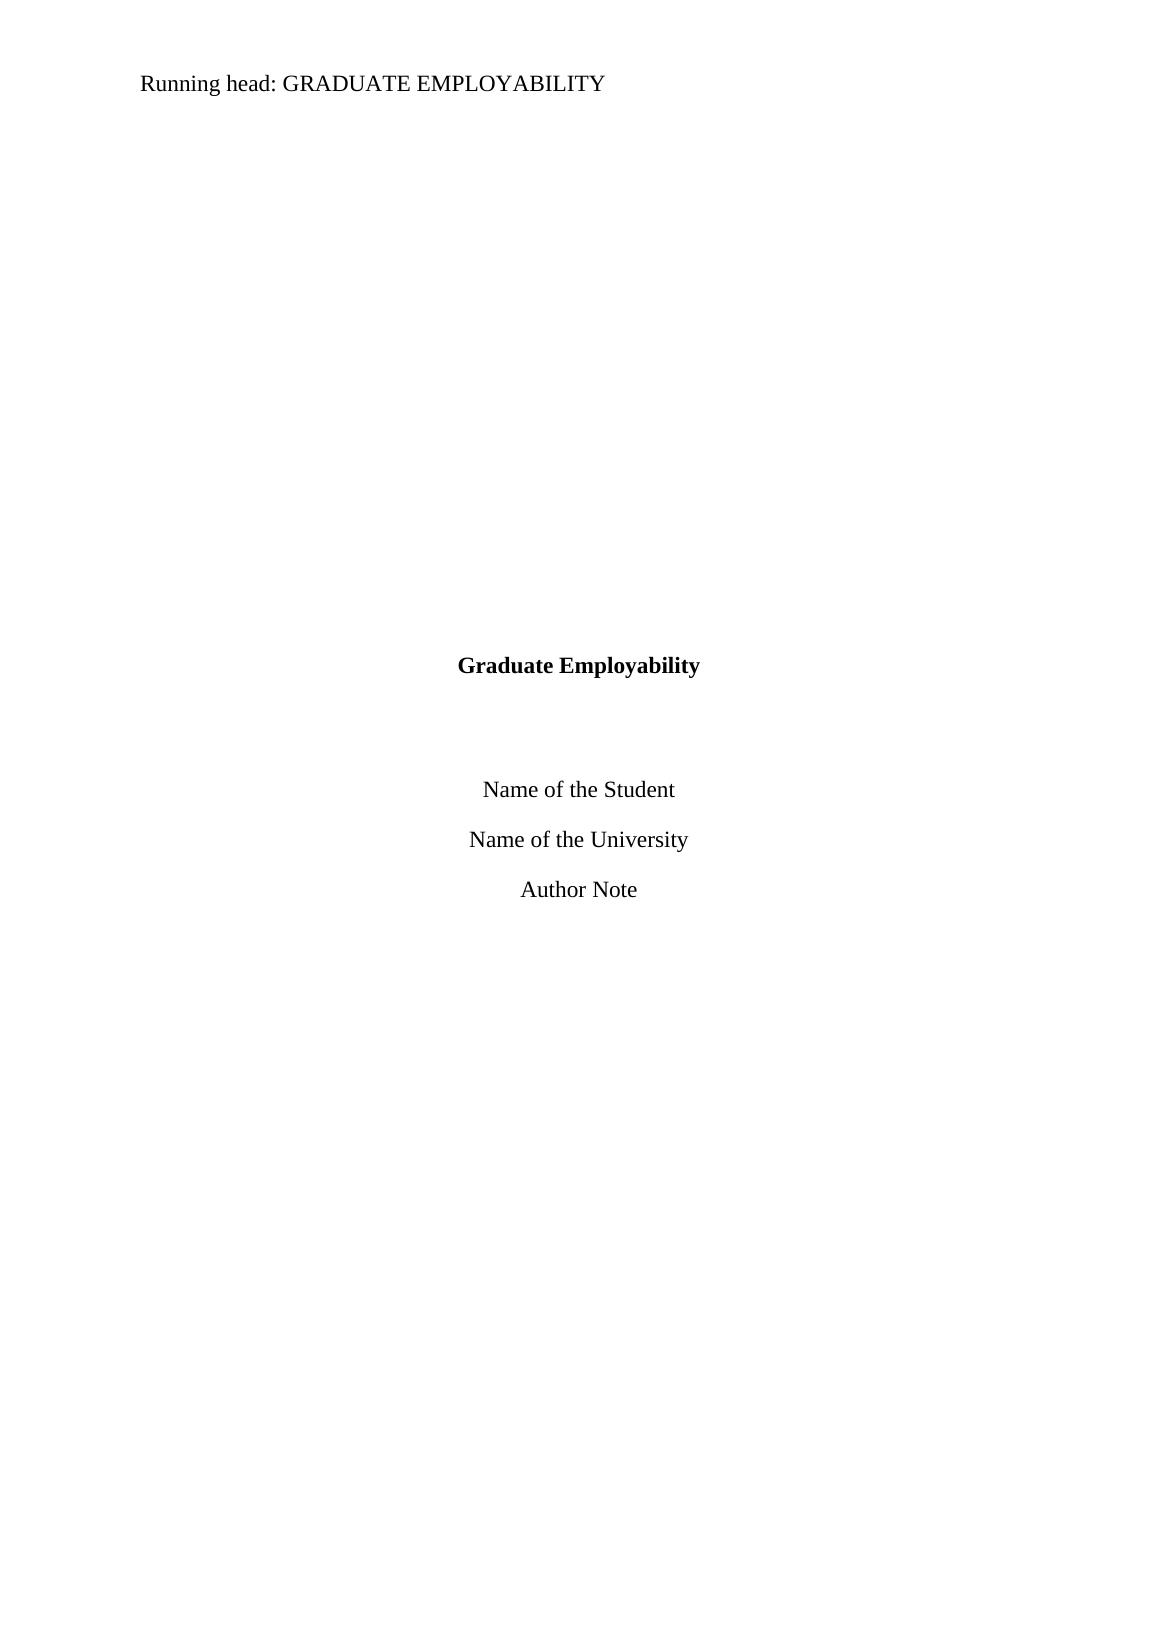 Graduate Employability Skills - PDF_1